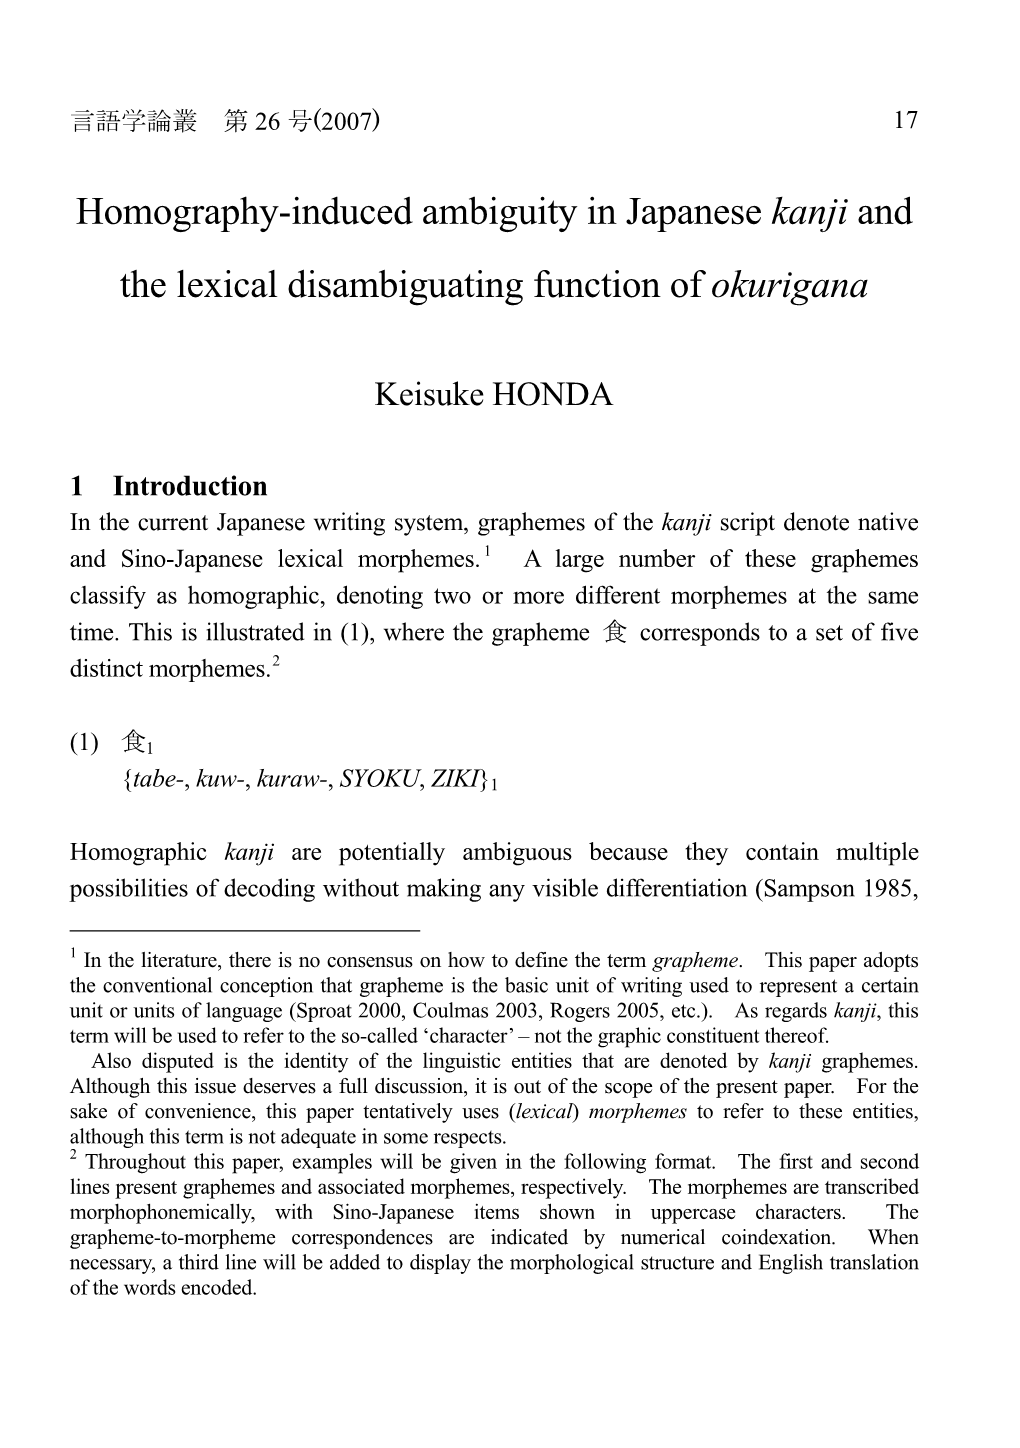 Homography-Induced Ambiguity in Japanese Kanji and the Lexical Disambiguating Function of Okurigana